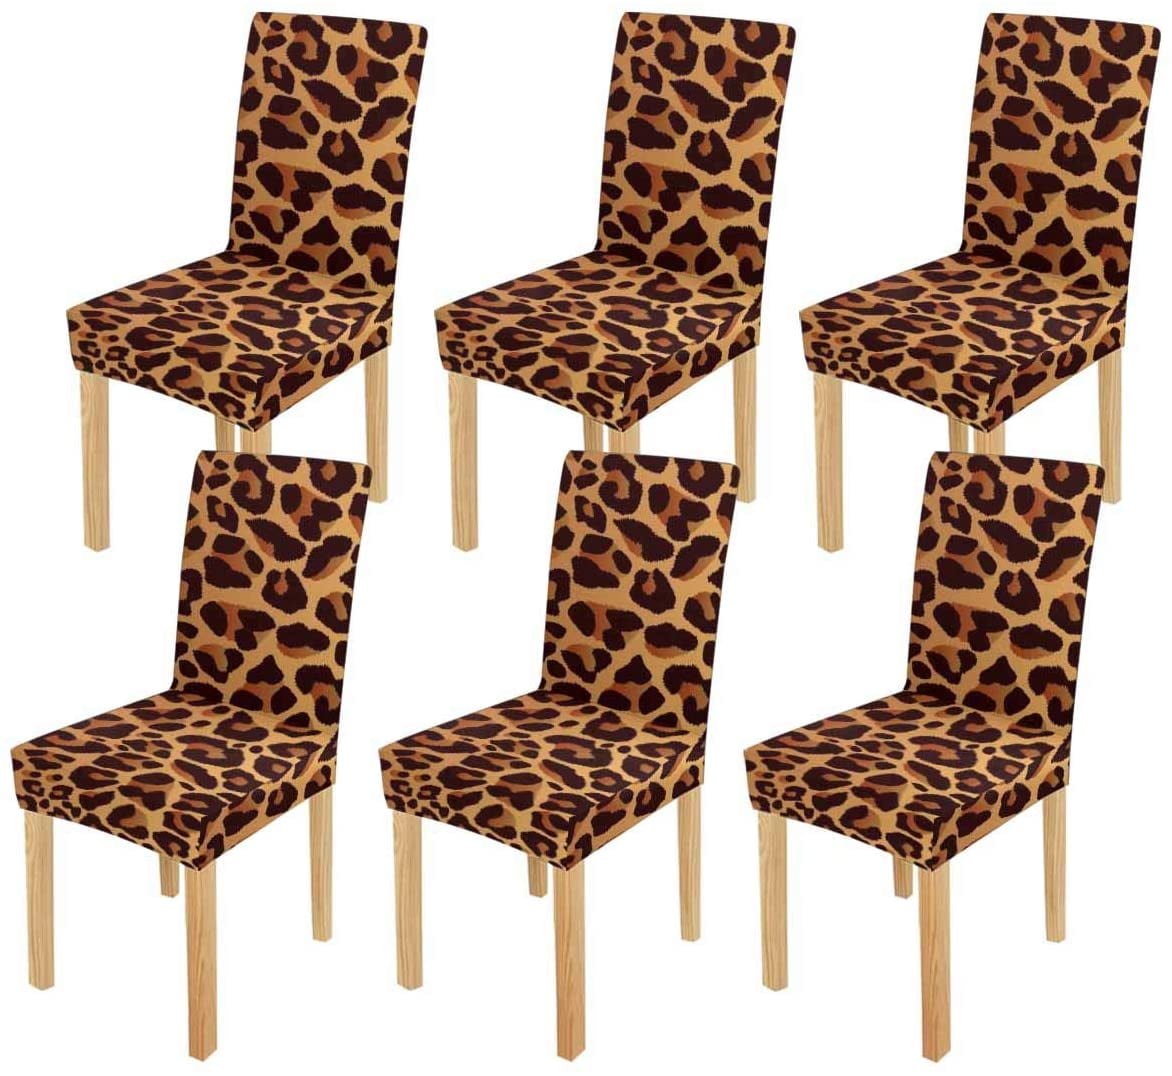 Zhanzzk Leopard Print Stretch Chair, Leopard Print Parson Chair Covers